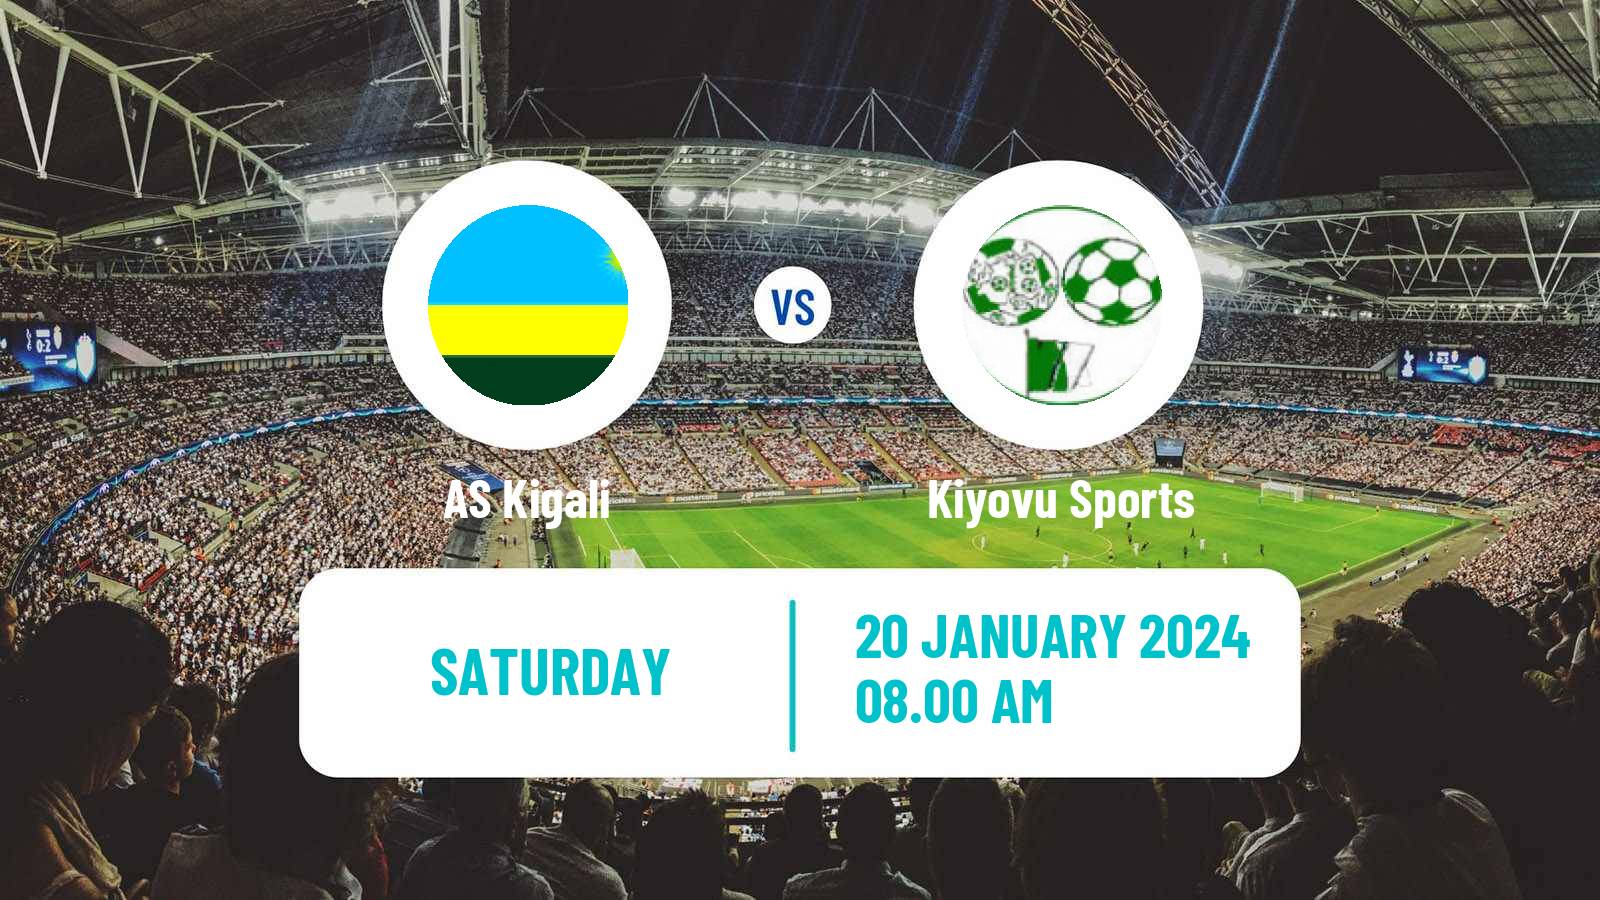 Soccer Rwanda Premier League Kigali - Kiyovu Sports